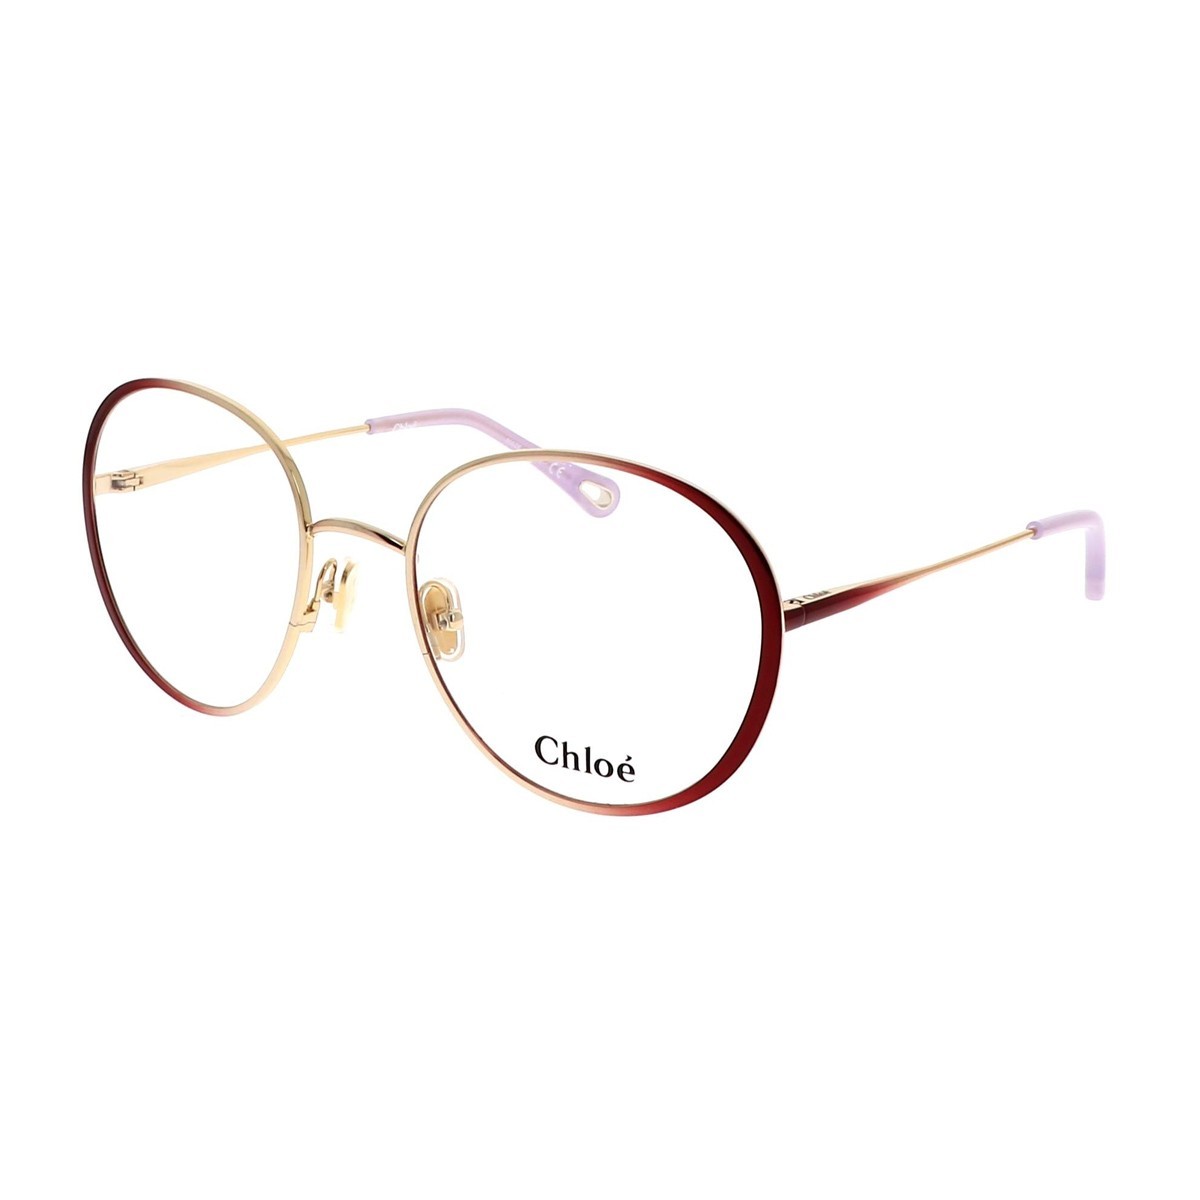 111Y4950A - - CHLOE | Women's eyeglasses